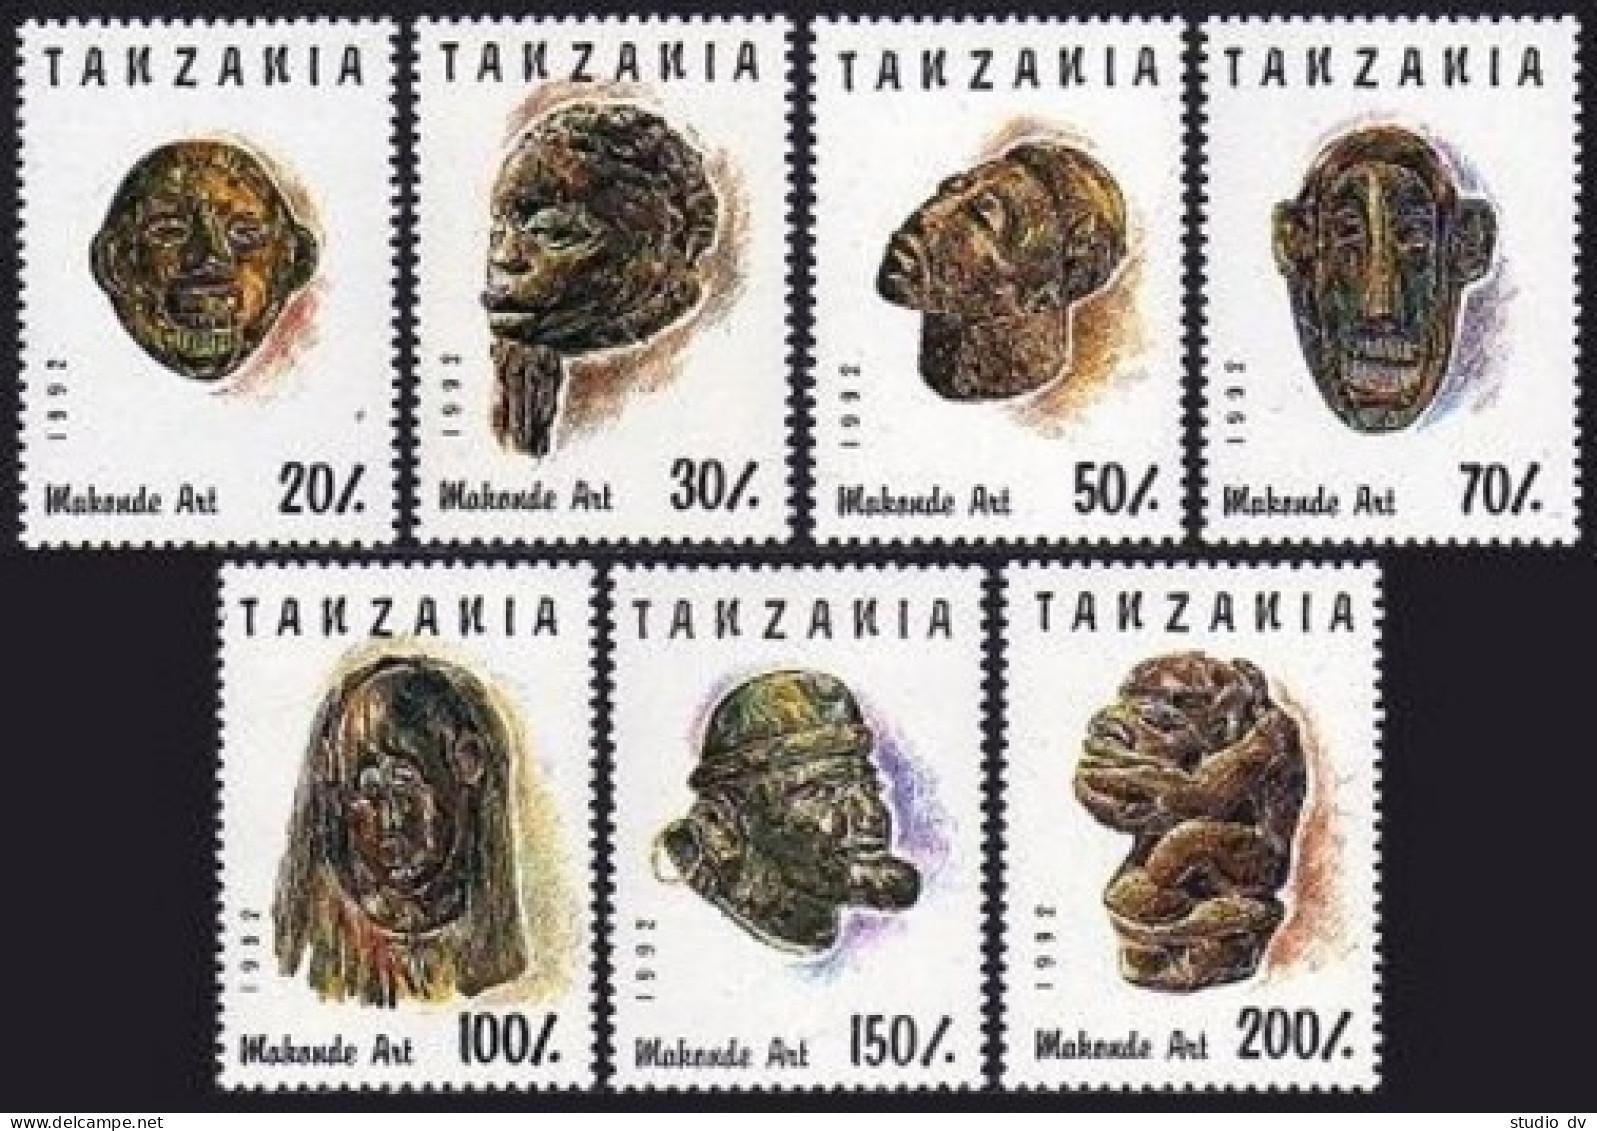 Tanzania 985A-985G,987H,MNH.Michel 1437-1443,Bl.208. Various Carved Faces 1992. - Tanzania (1964-...)